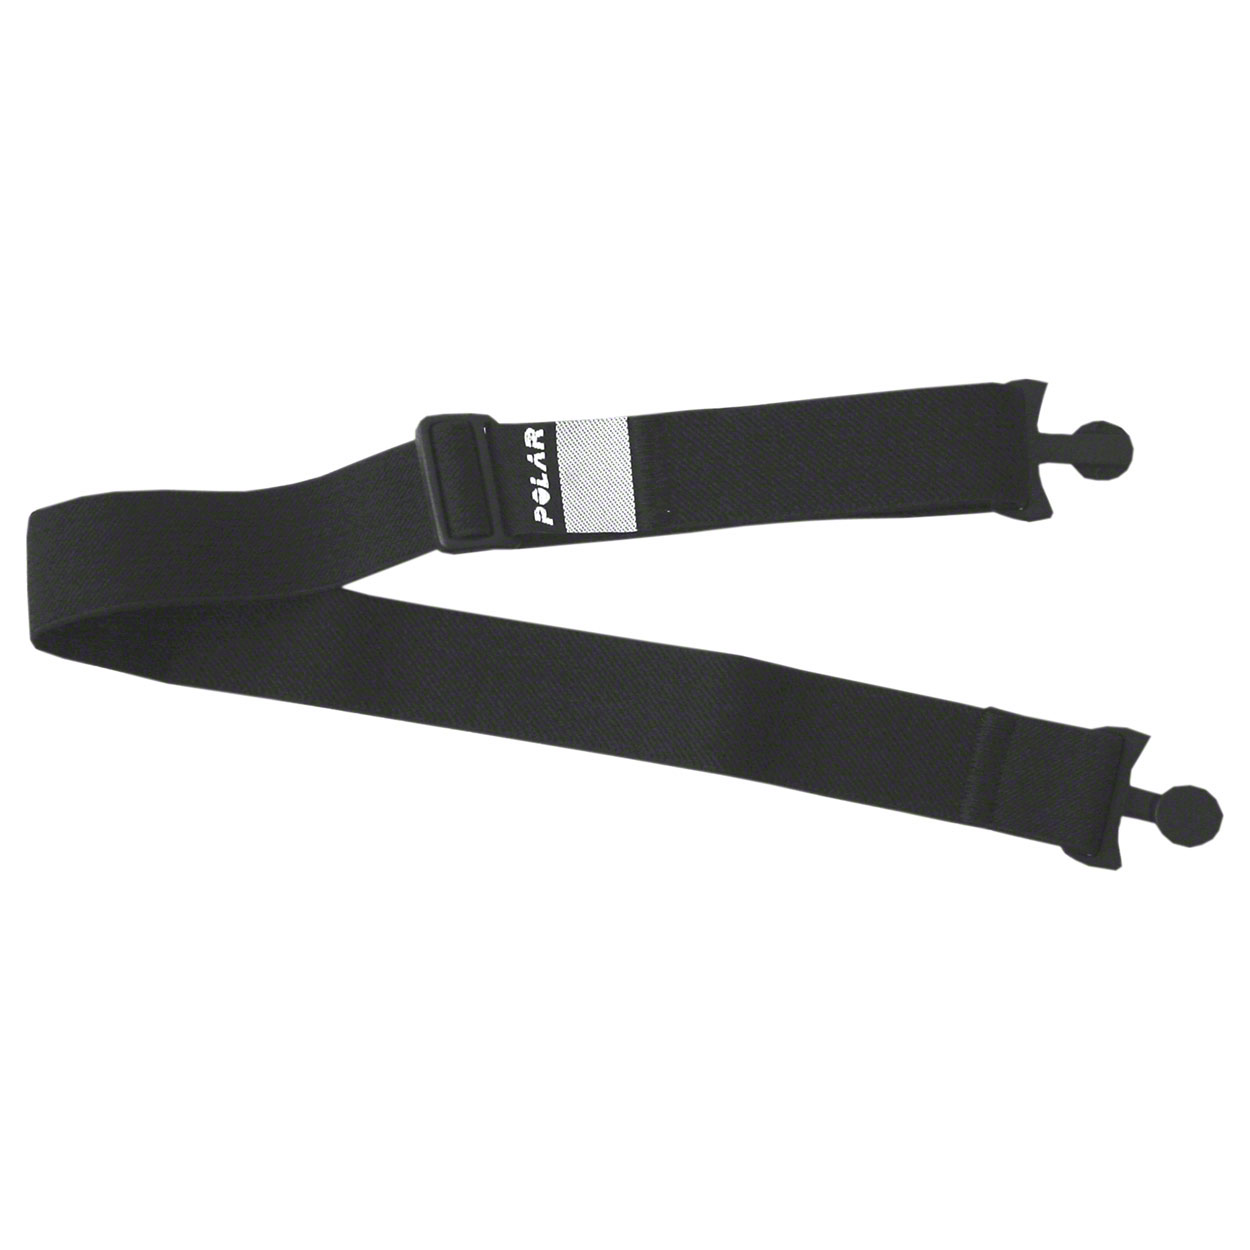 POLAR replacement belt for POLAR transmitter, size S buy online | Sport-Tec